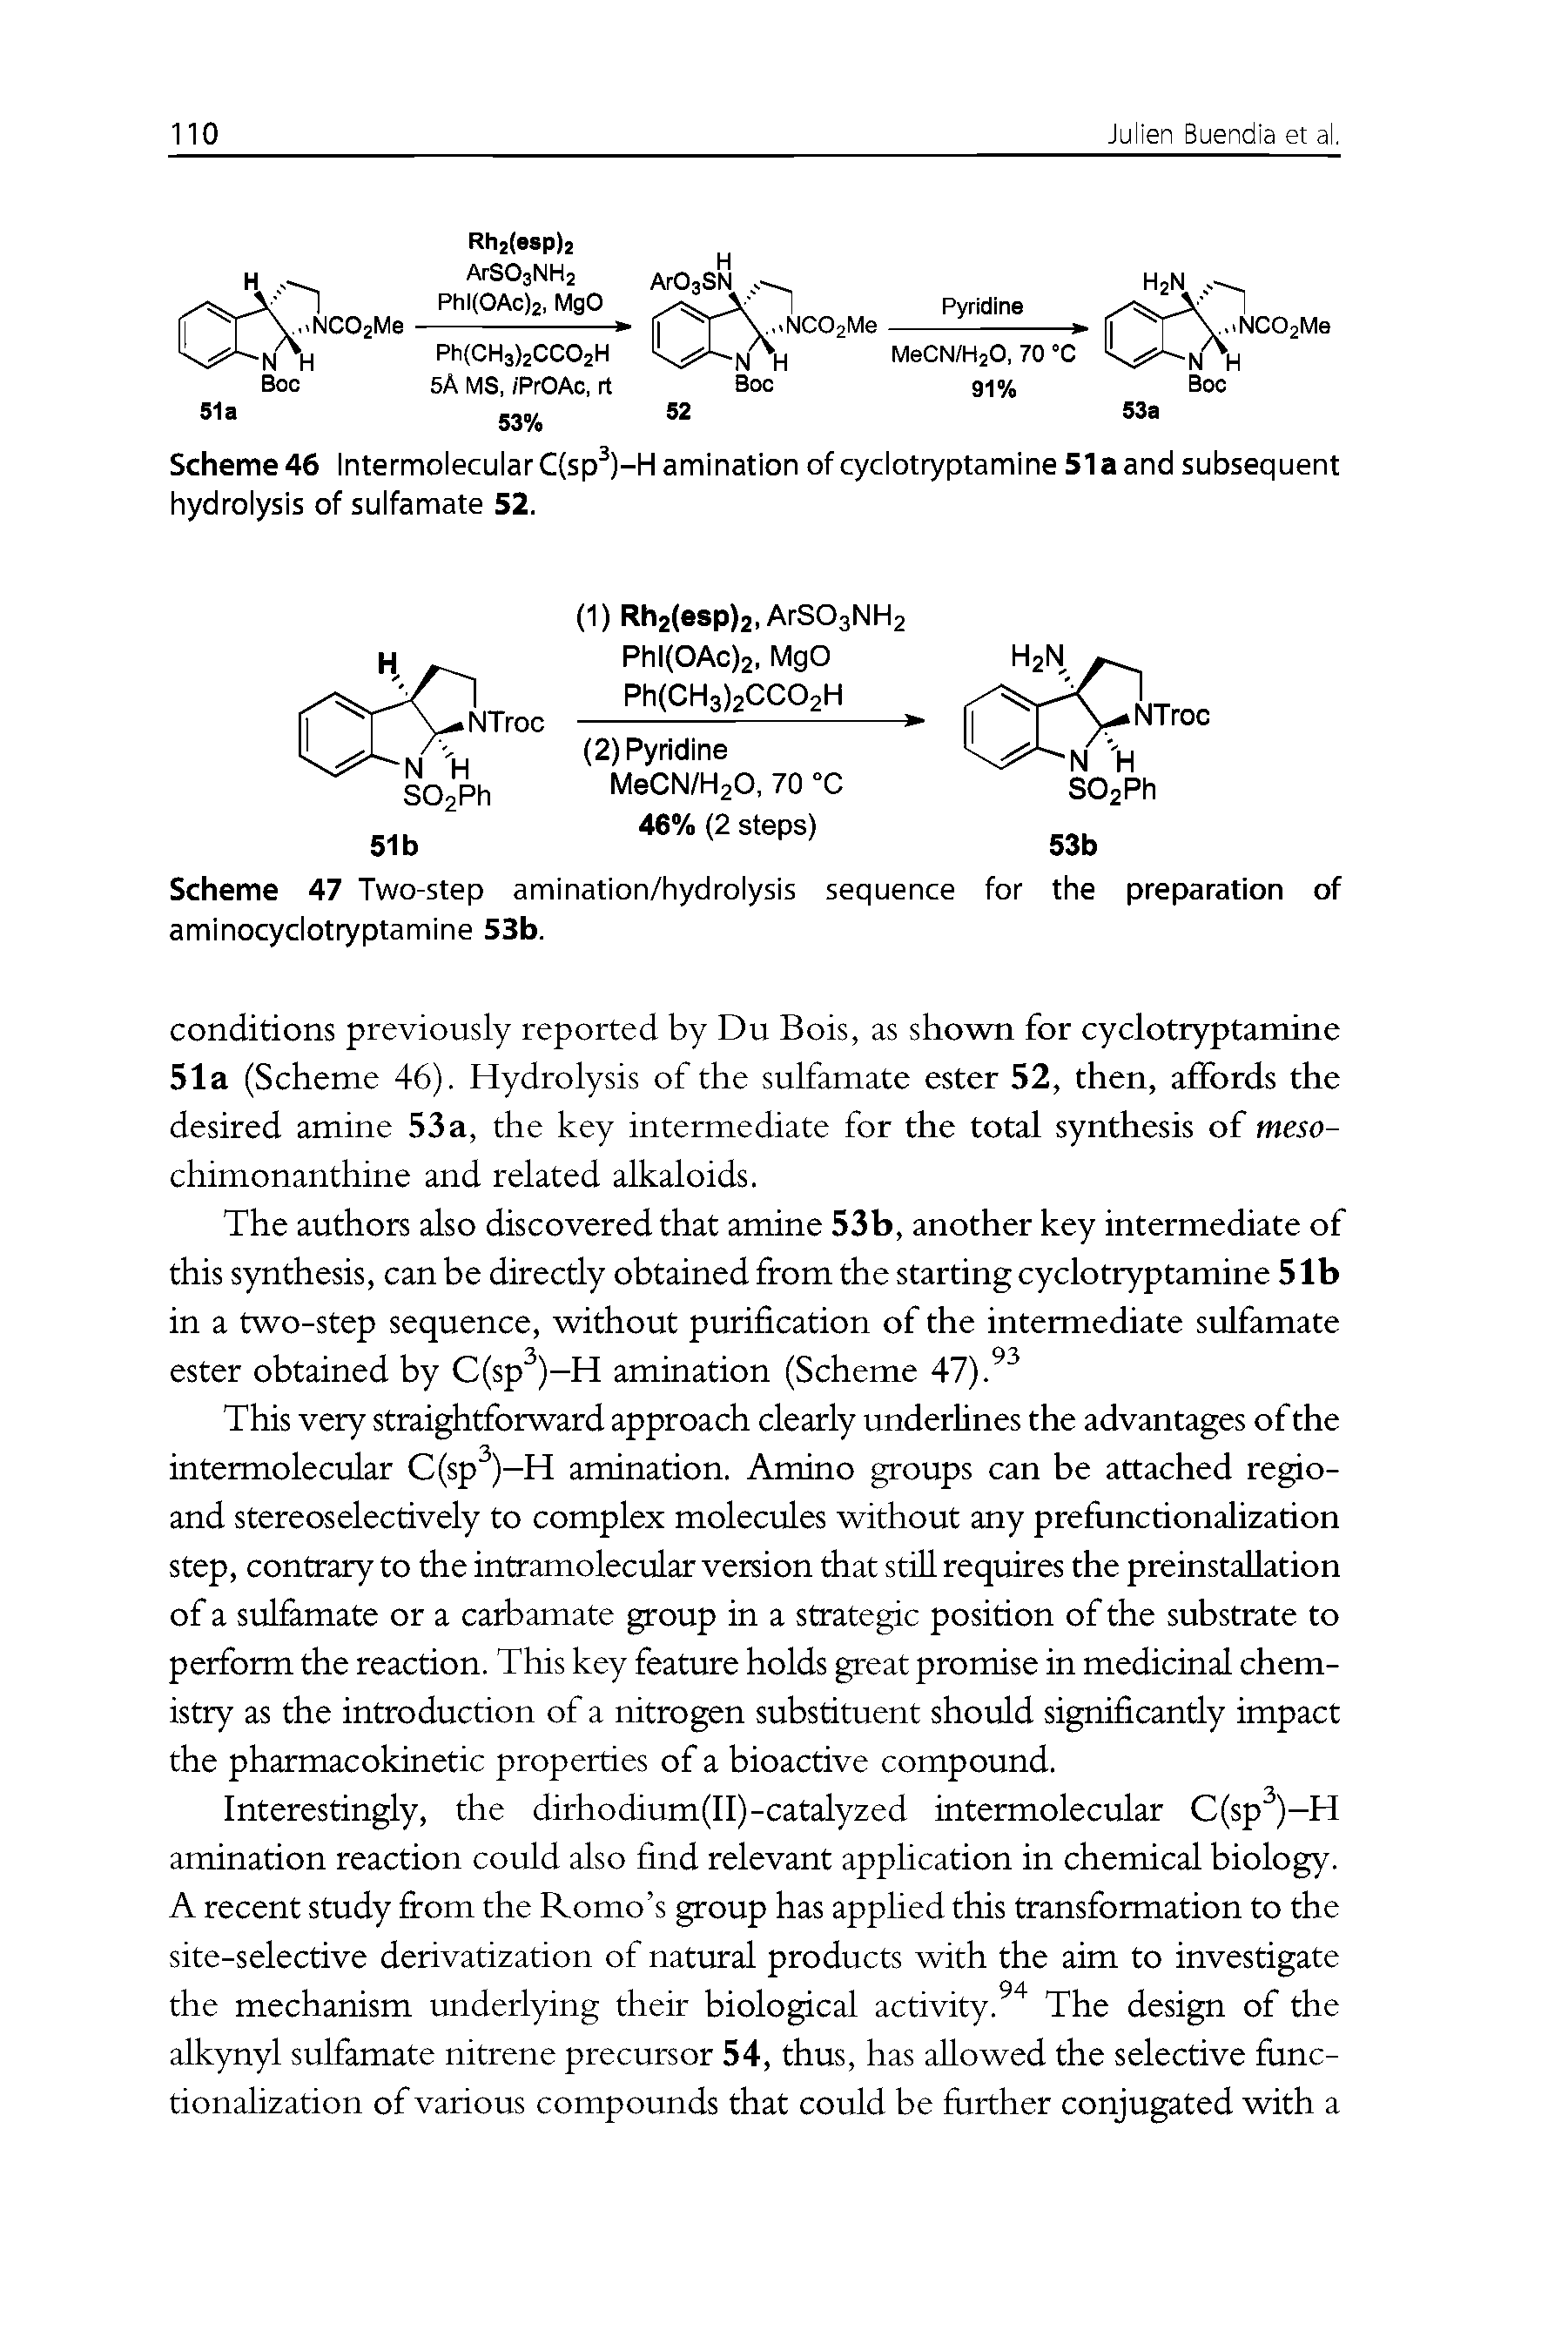 Scheme 47 Two-step amination/hydrolysis sequence for aminocyclotryptamine 53b.